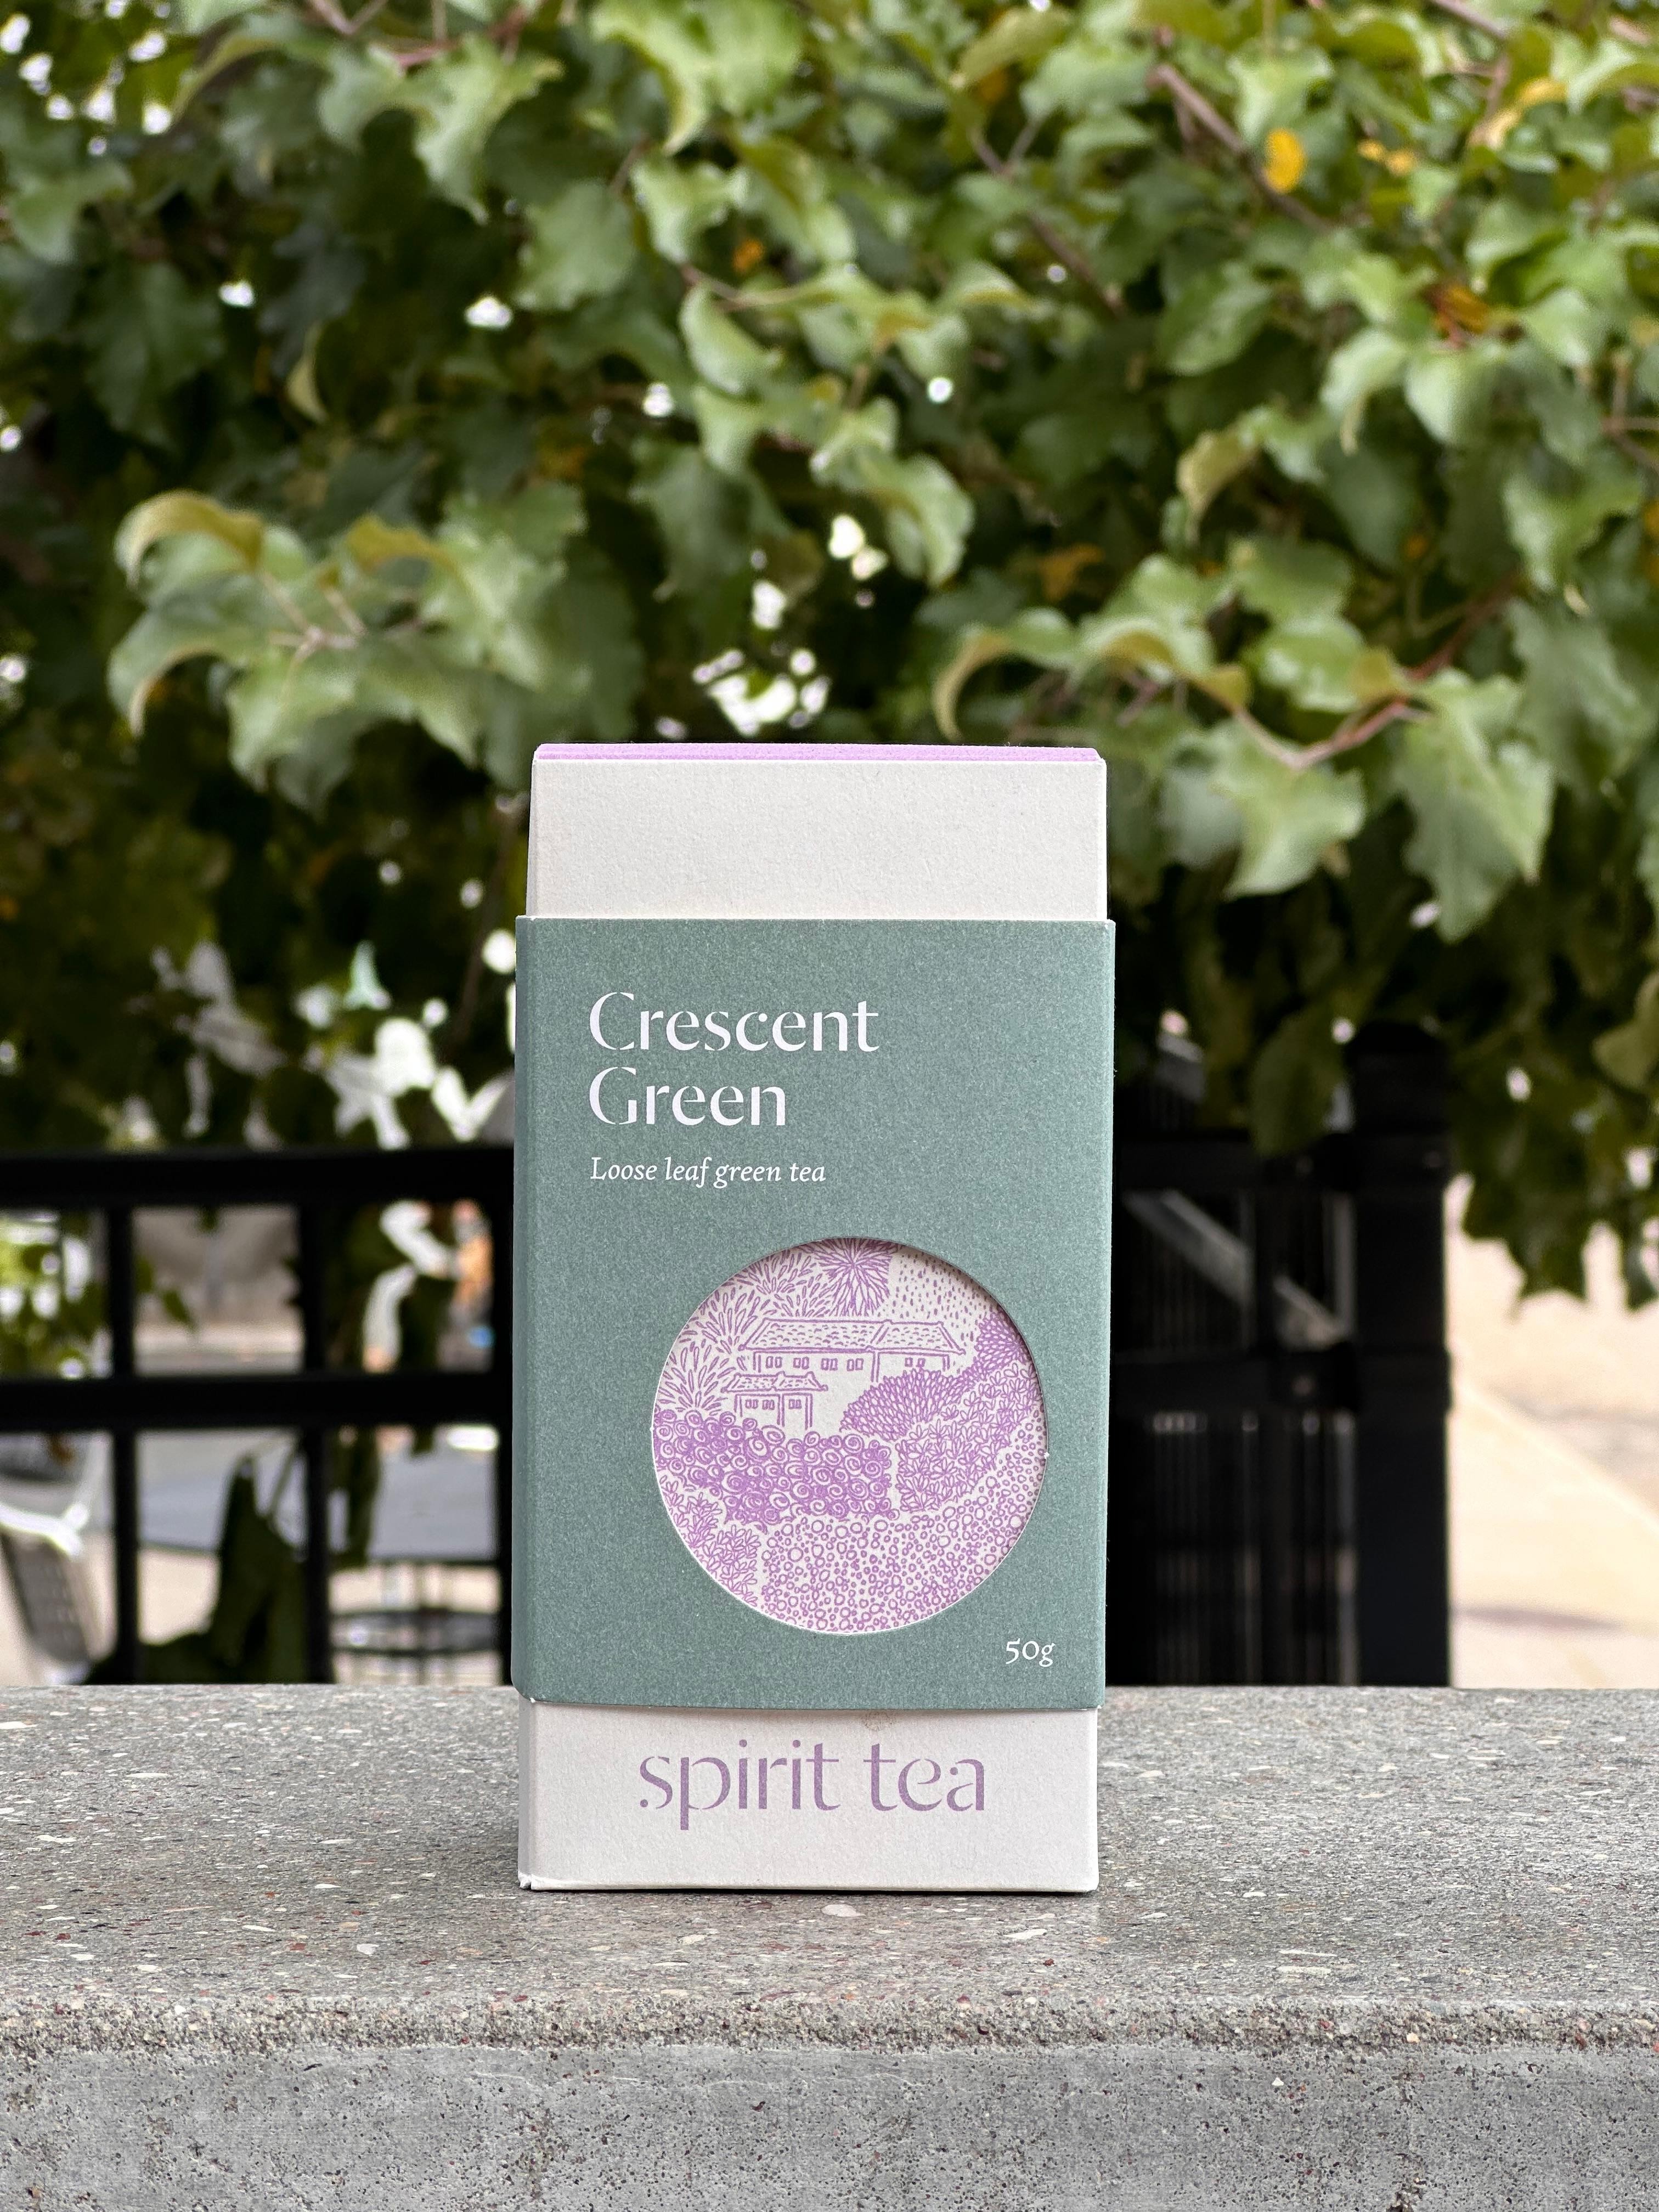 Spirit Tea - Crescent Green - 50g Box